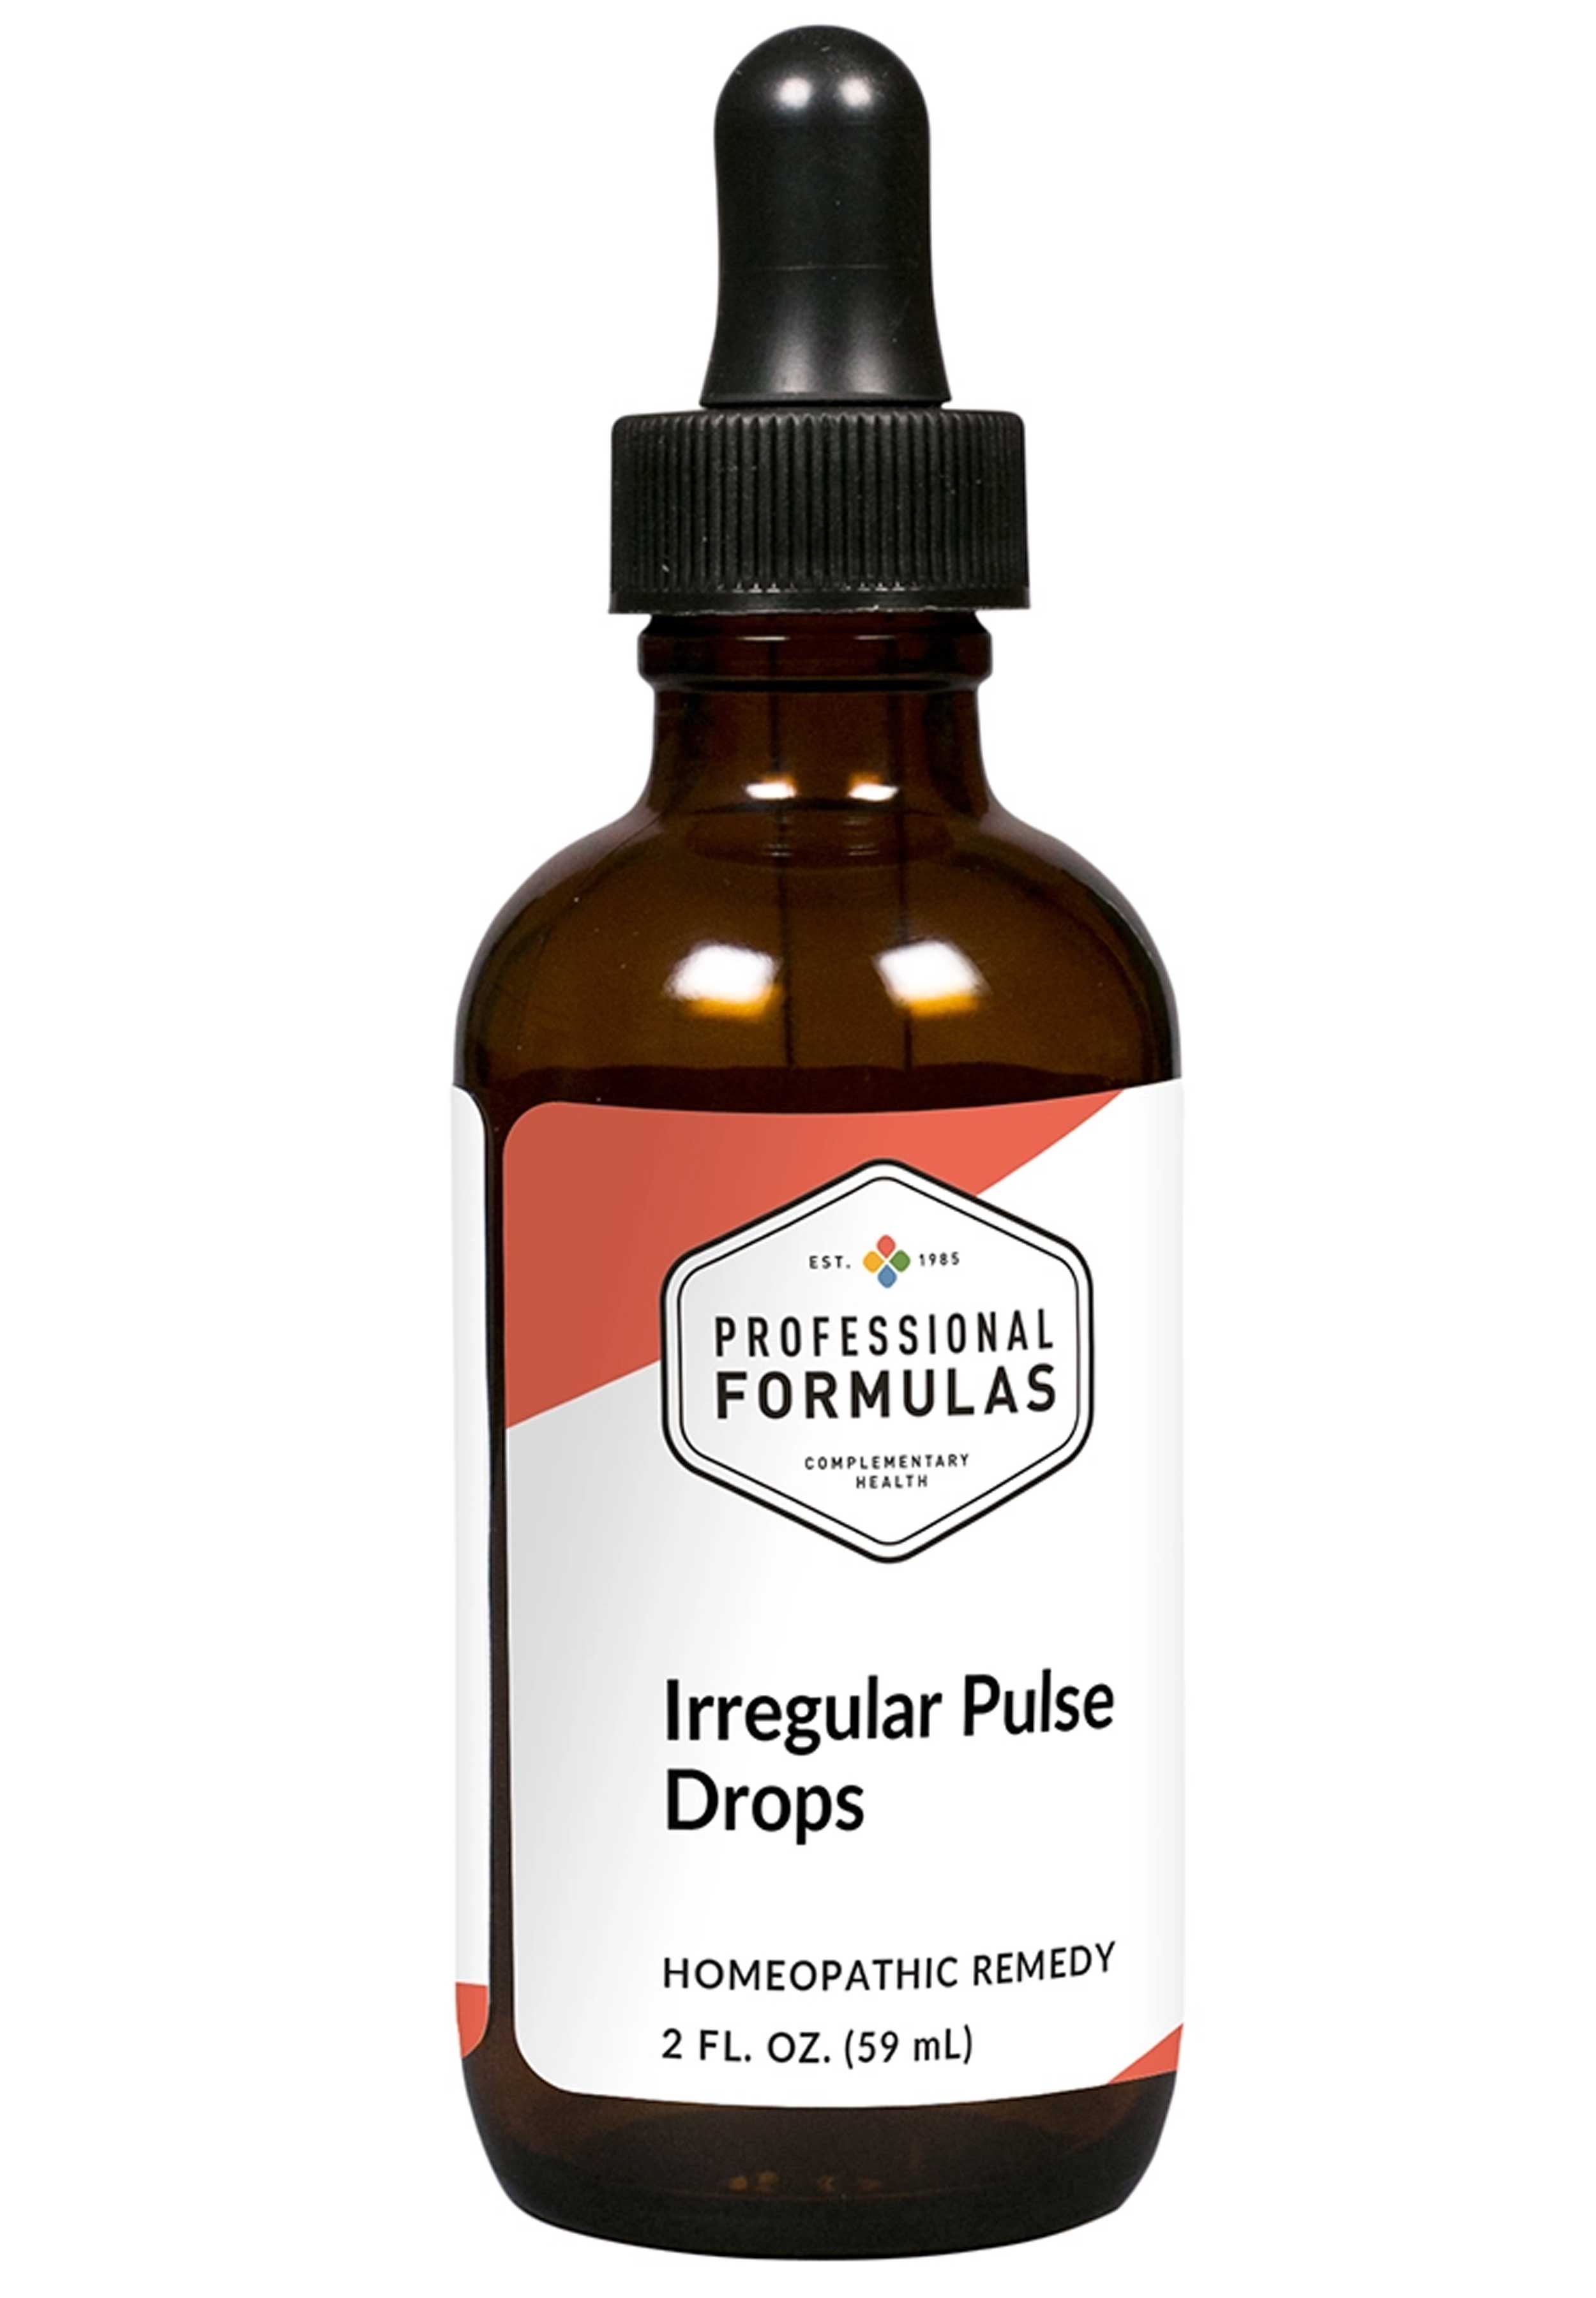 Professional Formulas Irregular Pulse Drops